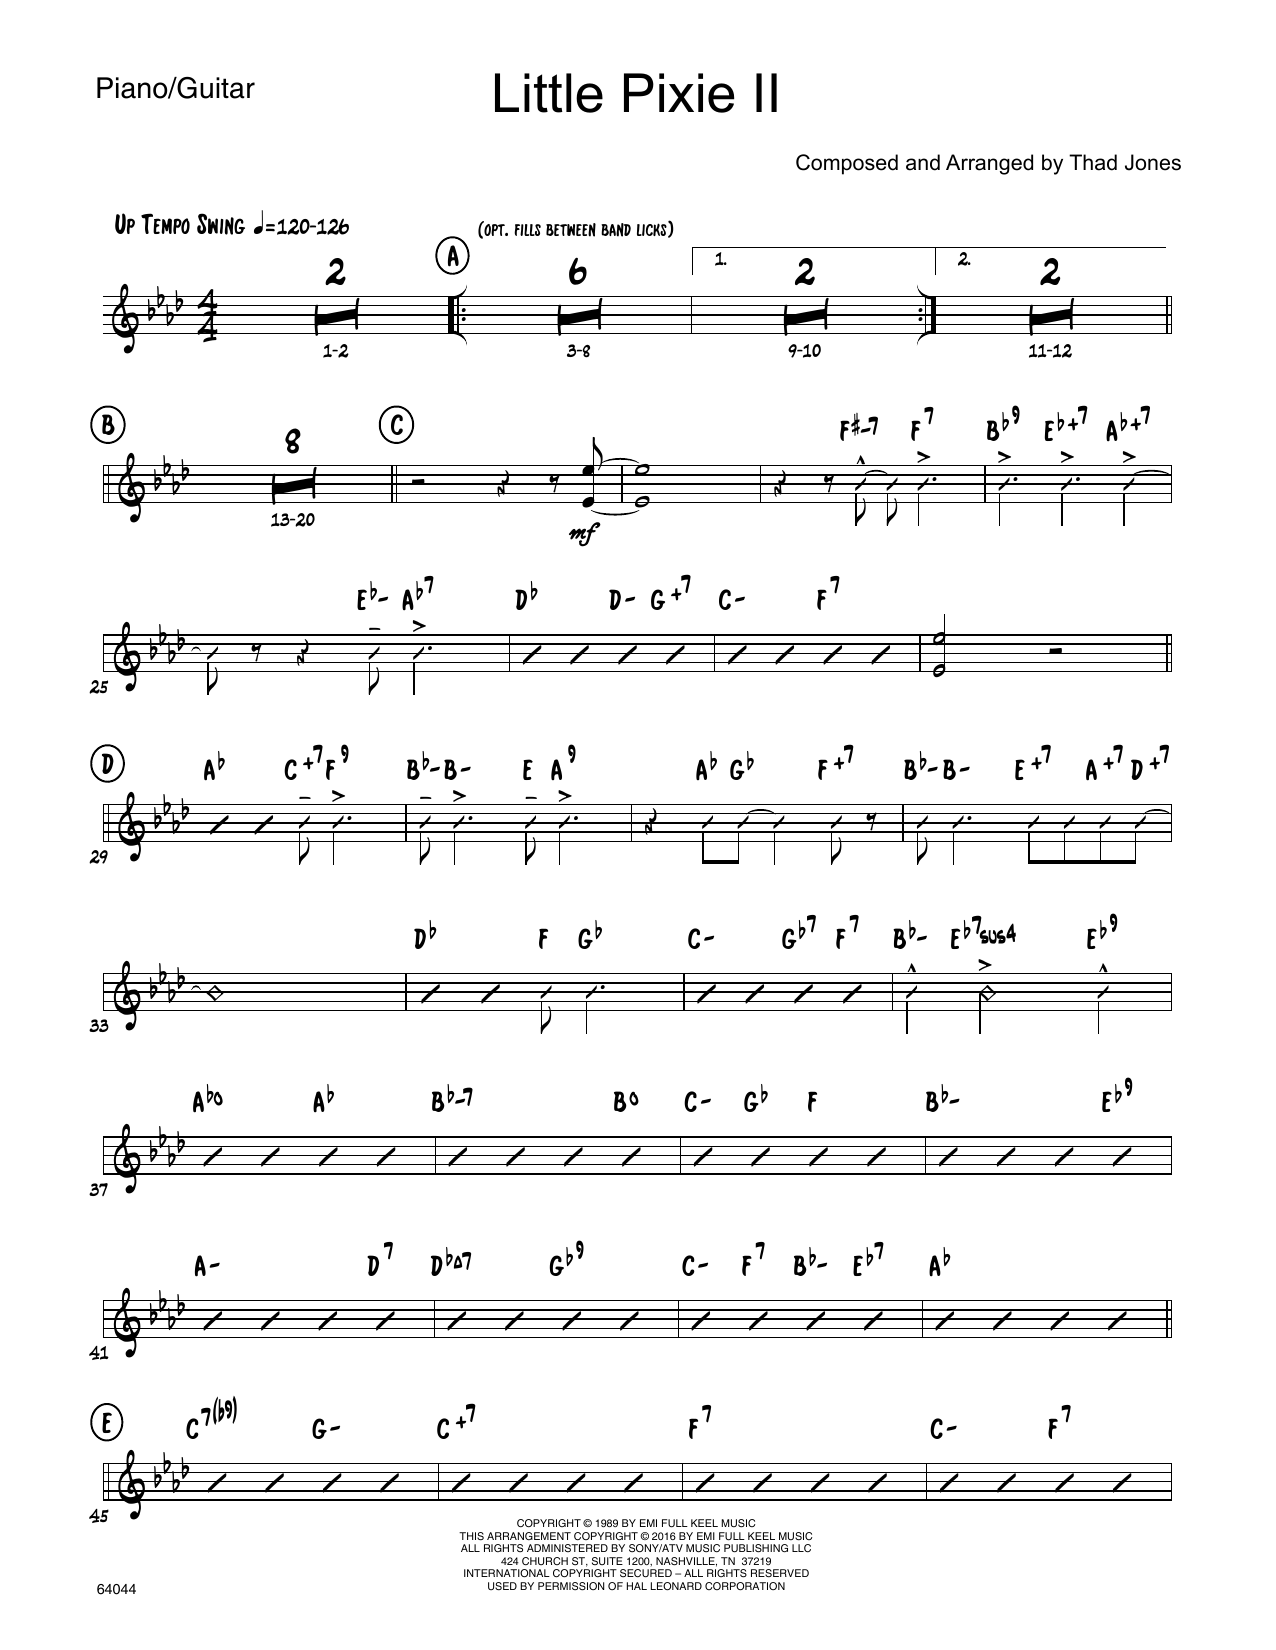 Download Thad Jones Little Pixie II - Piano/Guitar Sheet Music